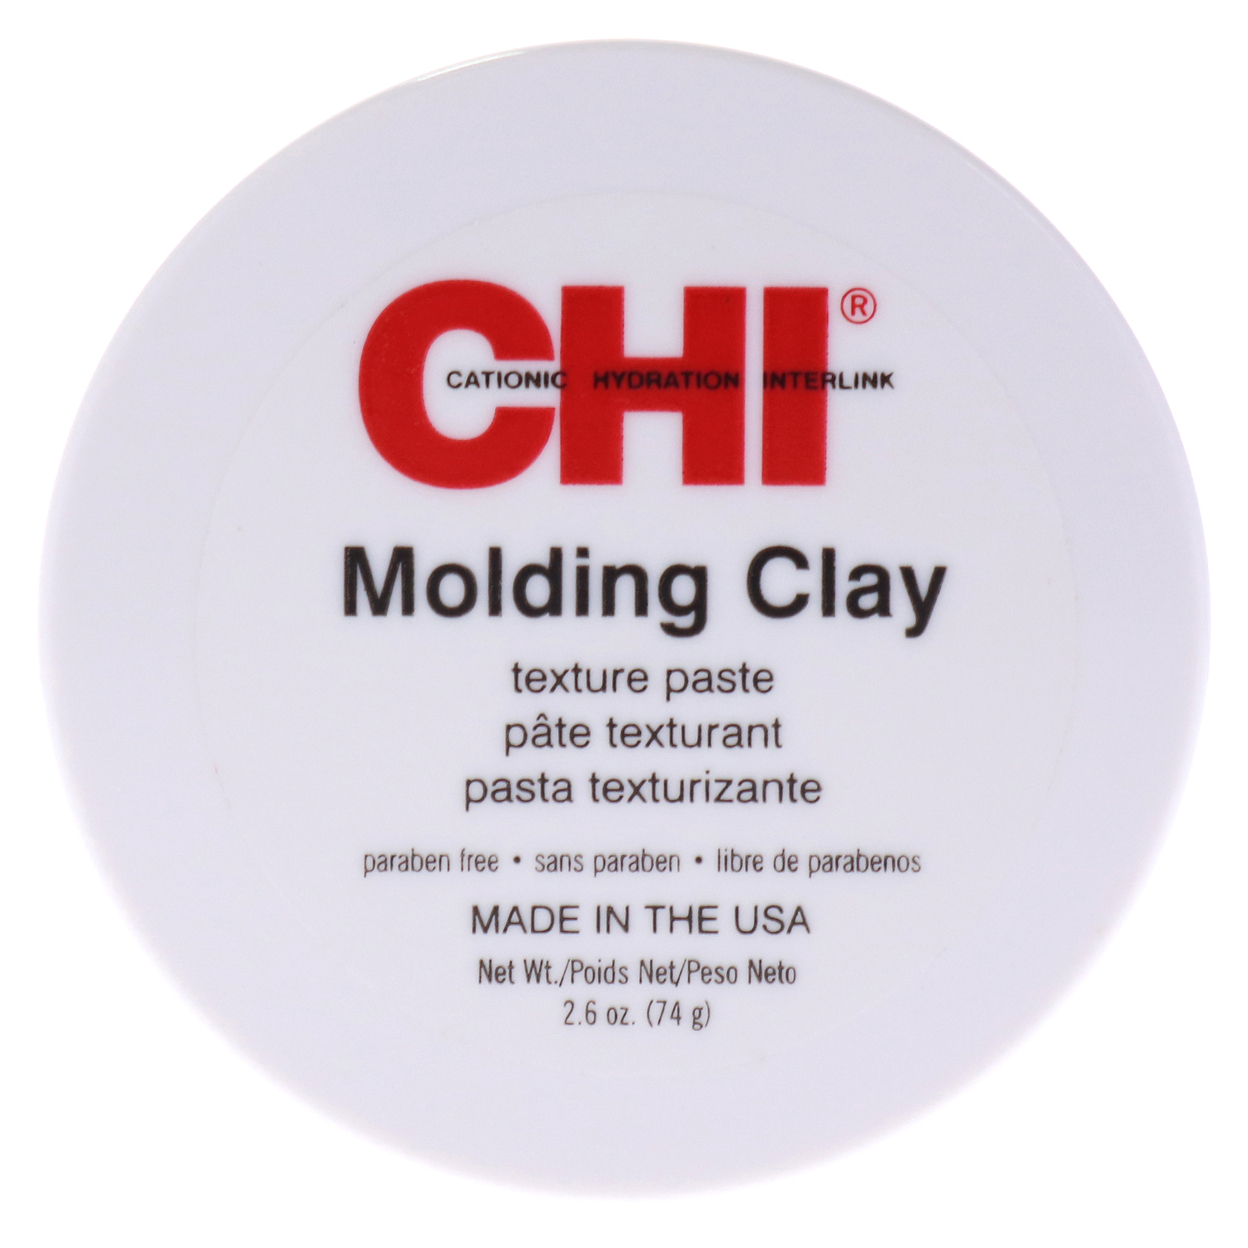 CHI Unisex HAIRCARE Molding Clay Texture Paste 2.6 Oz